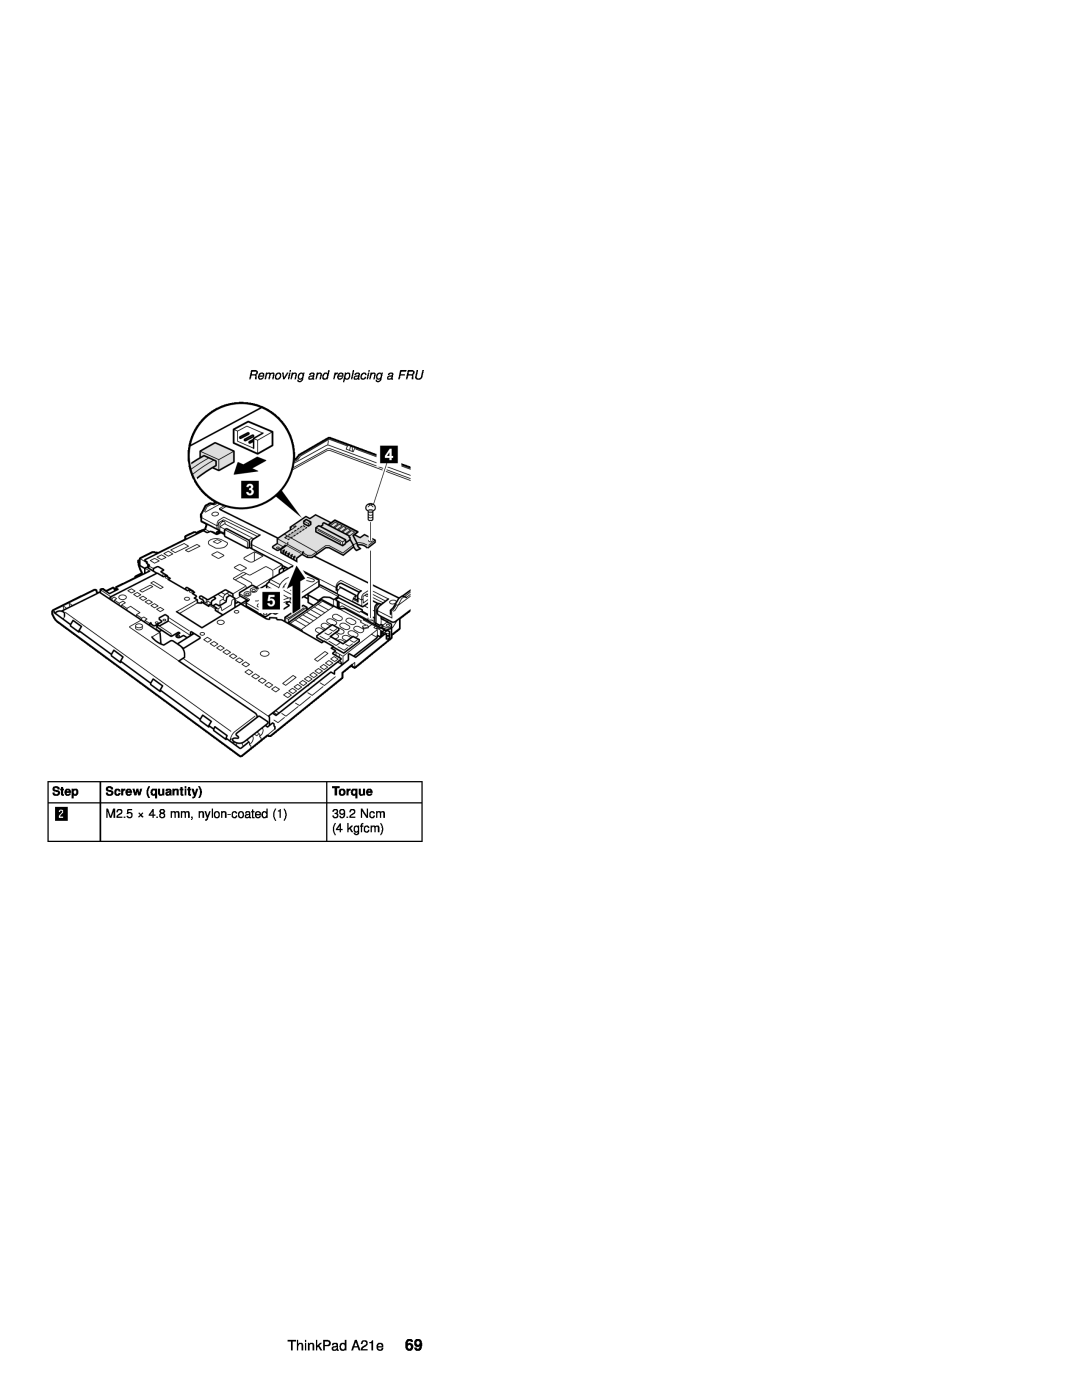 IBM MT 2632 manual ThinkPad A21e, Step, Screw quantity, Torque 